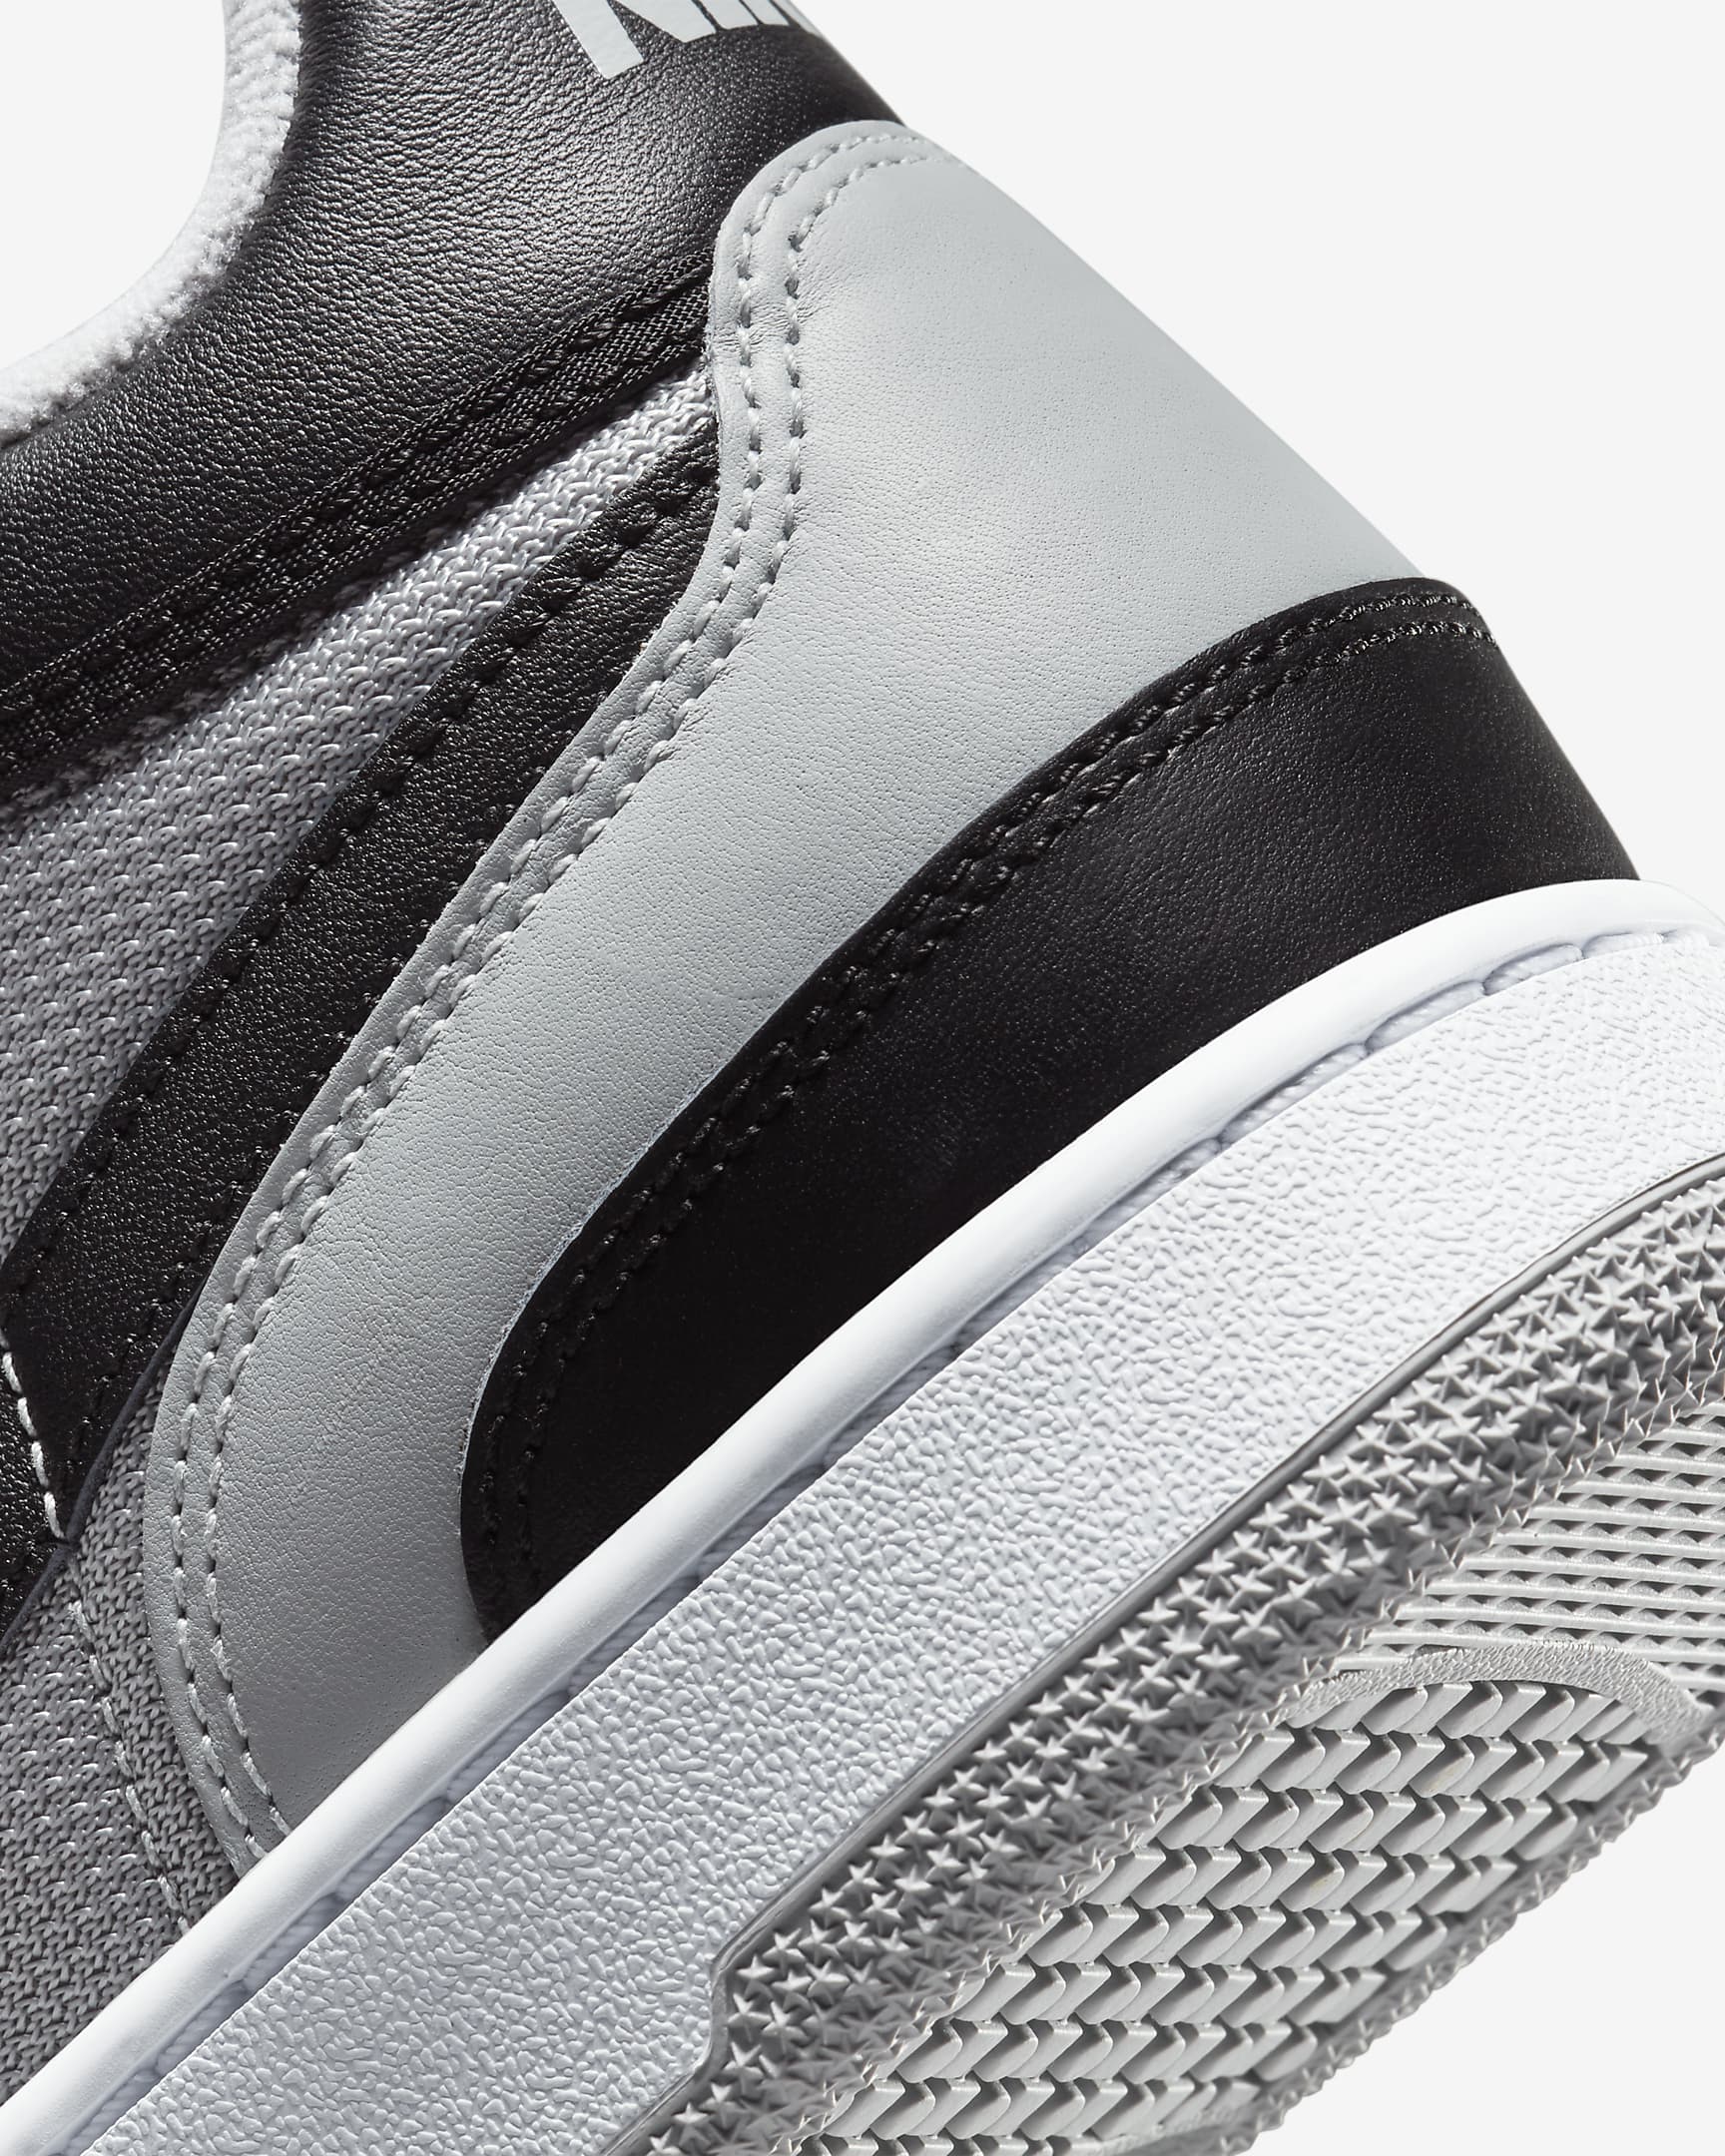 Nike Attack Men's Shoes - Light Smoke Grey/White/Black